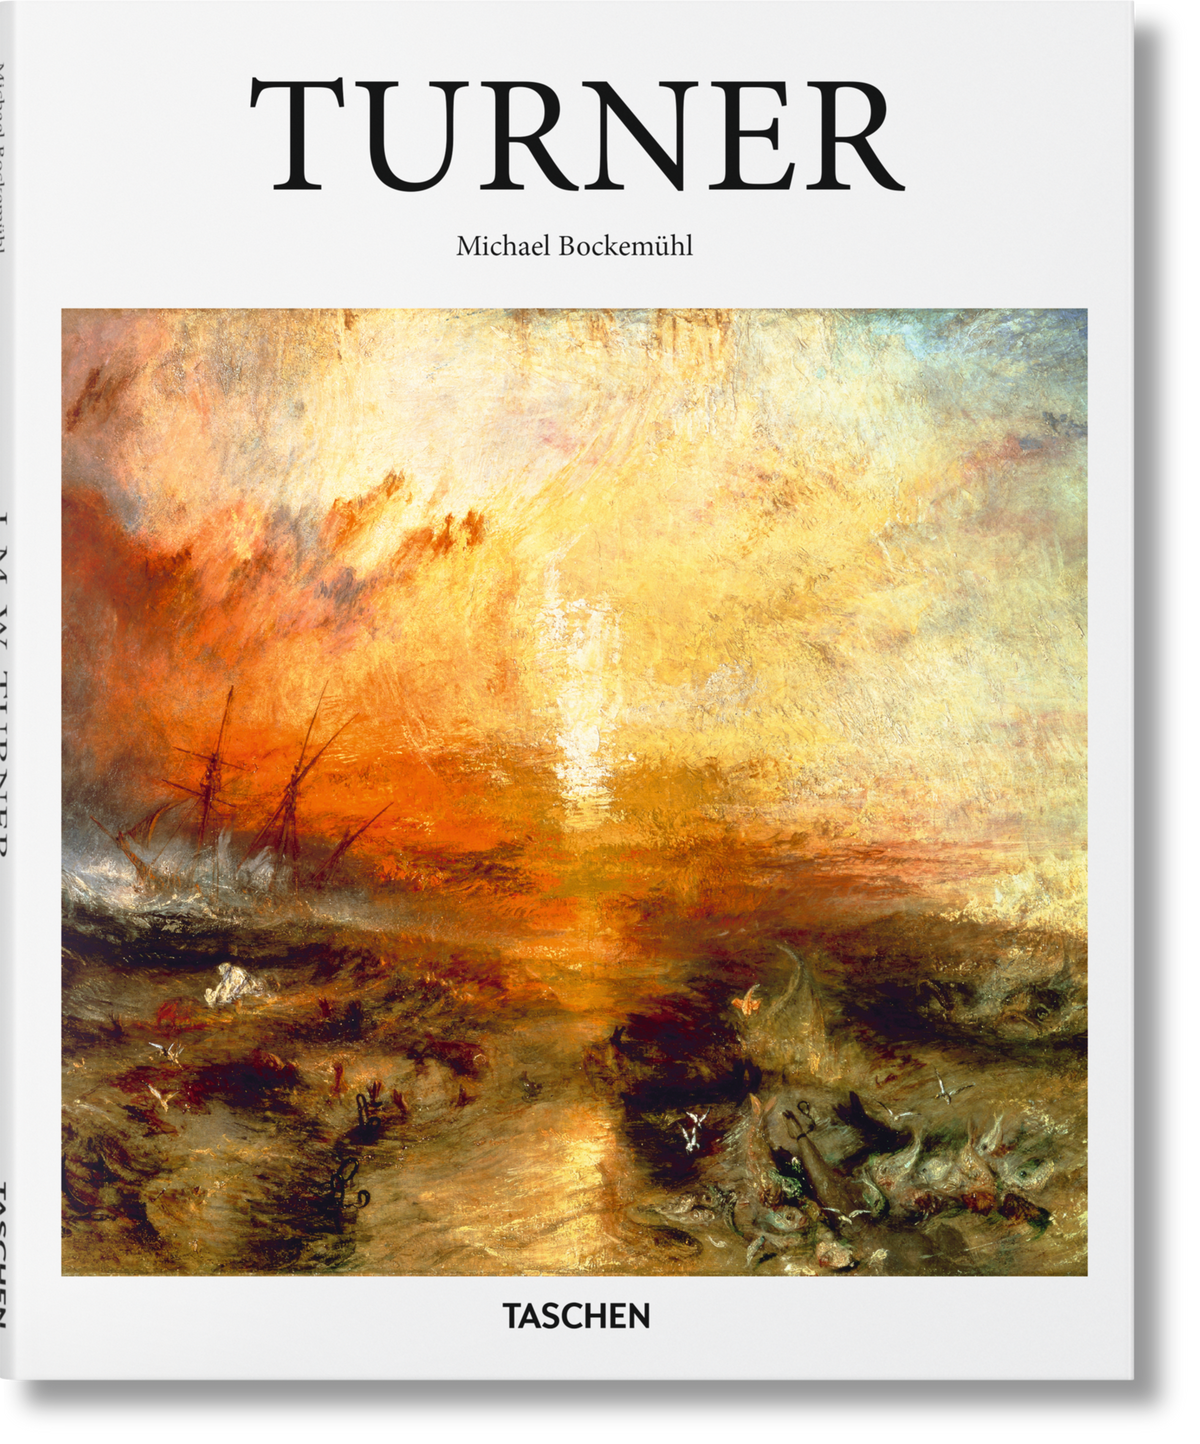 Turner by Michael Bockemühl